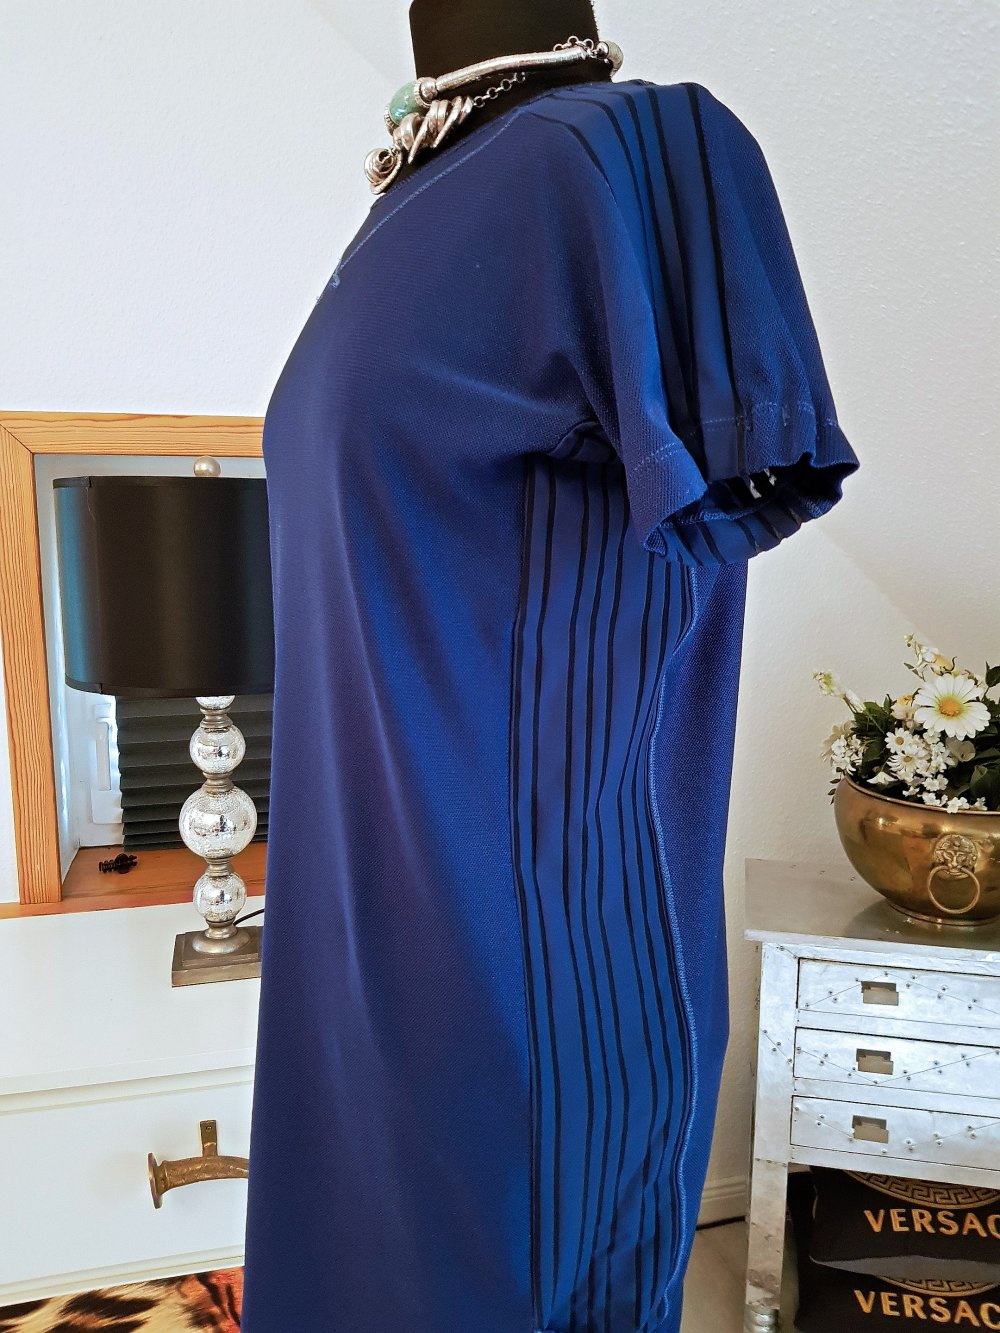 HIGH USE HIGH TECH Damen Kleid blau Jerseykleid Gr.S-M